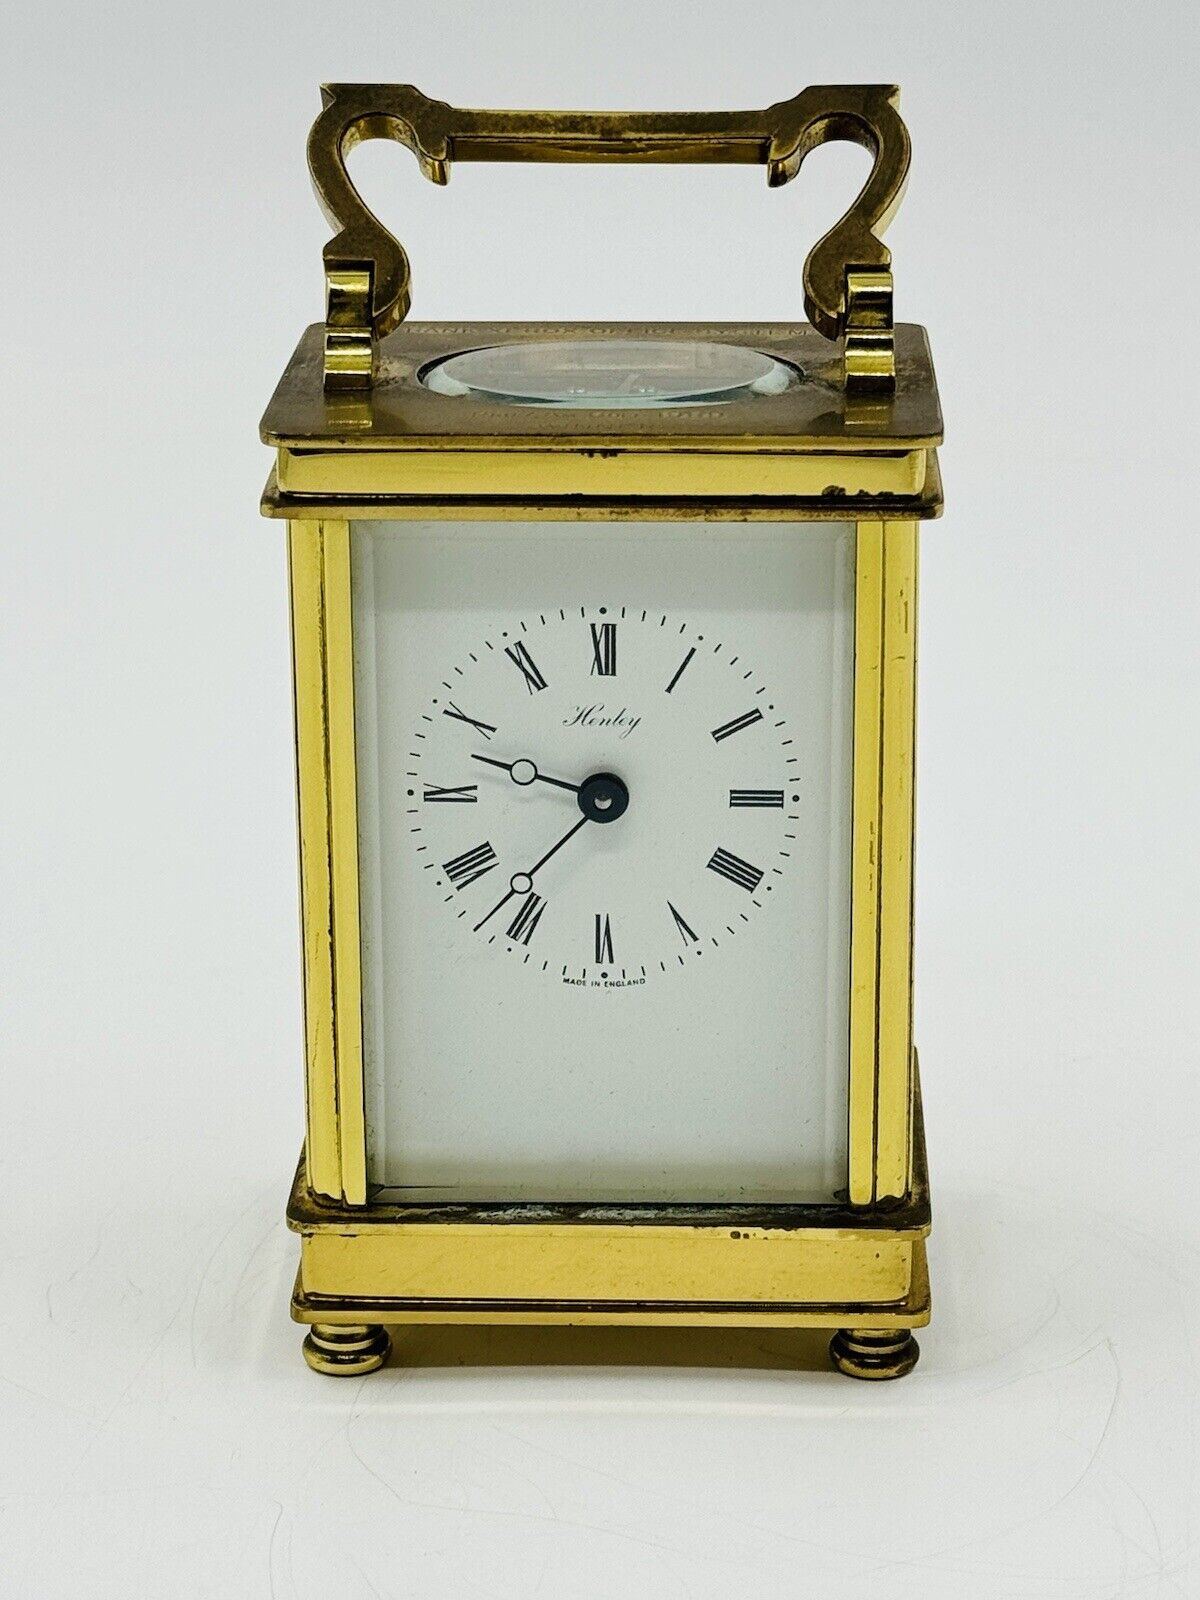 Vintage Henley Brass Carriage Clock Made in England - Golf 1989 Winner